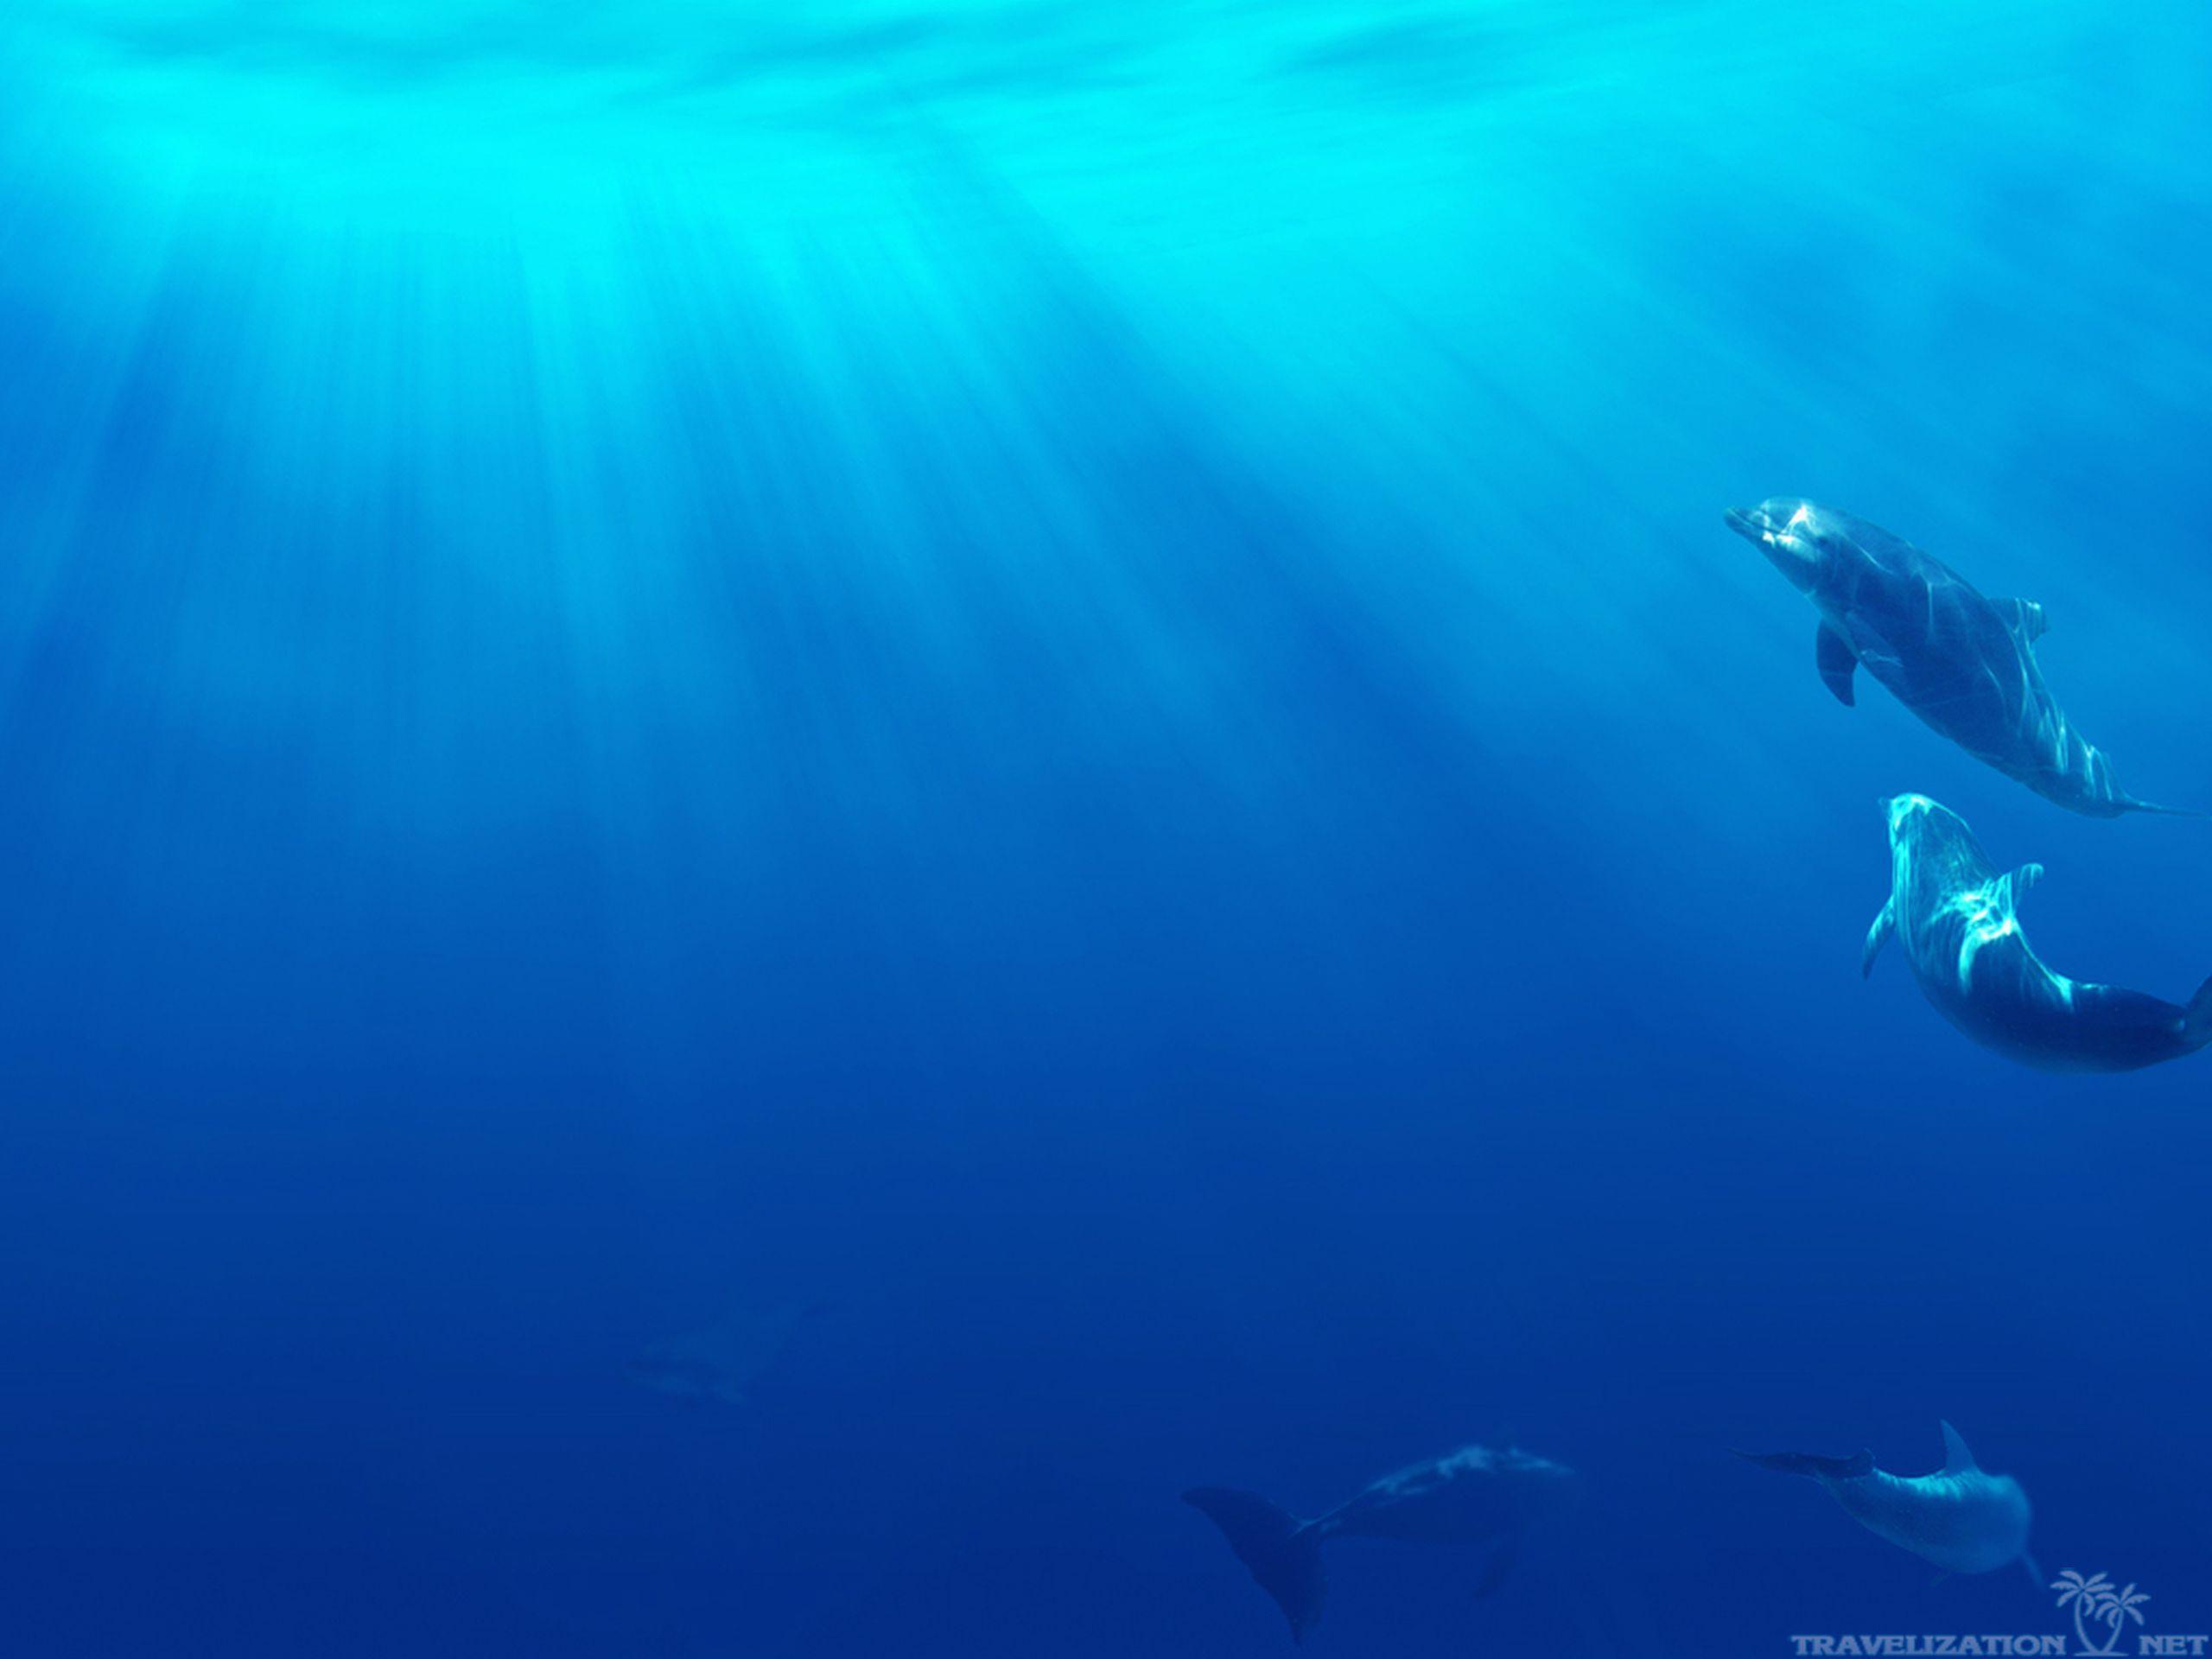 Best Nature Wallpaper: Deep Sea, Nature